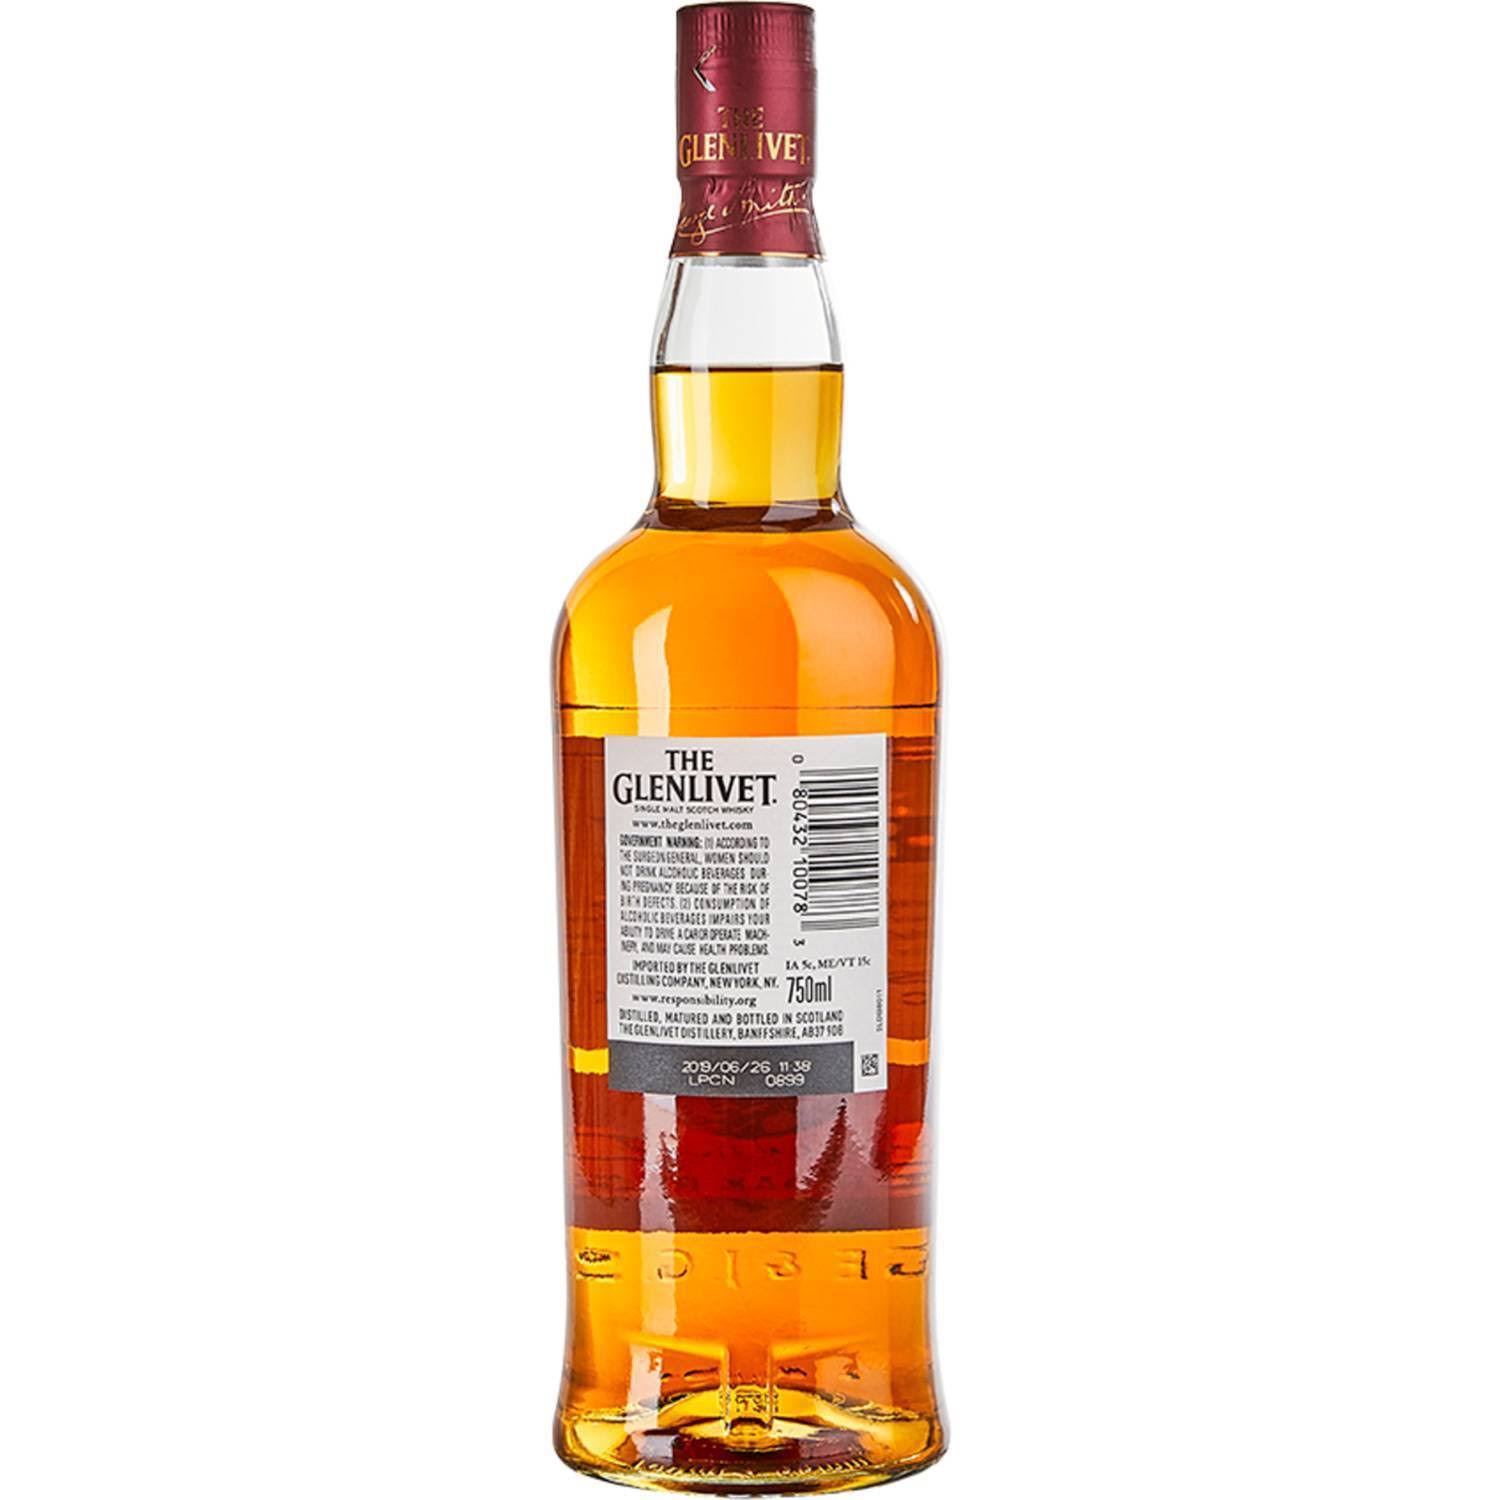 The Glenlivet Single Malt Scotch Whisky - French Oak Reserve, 15 Years